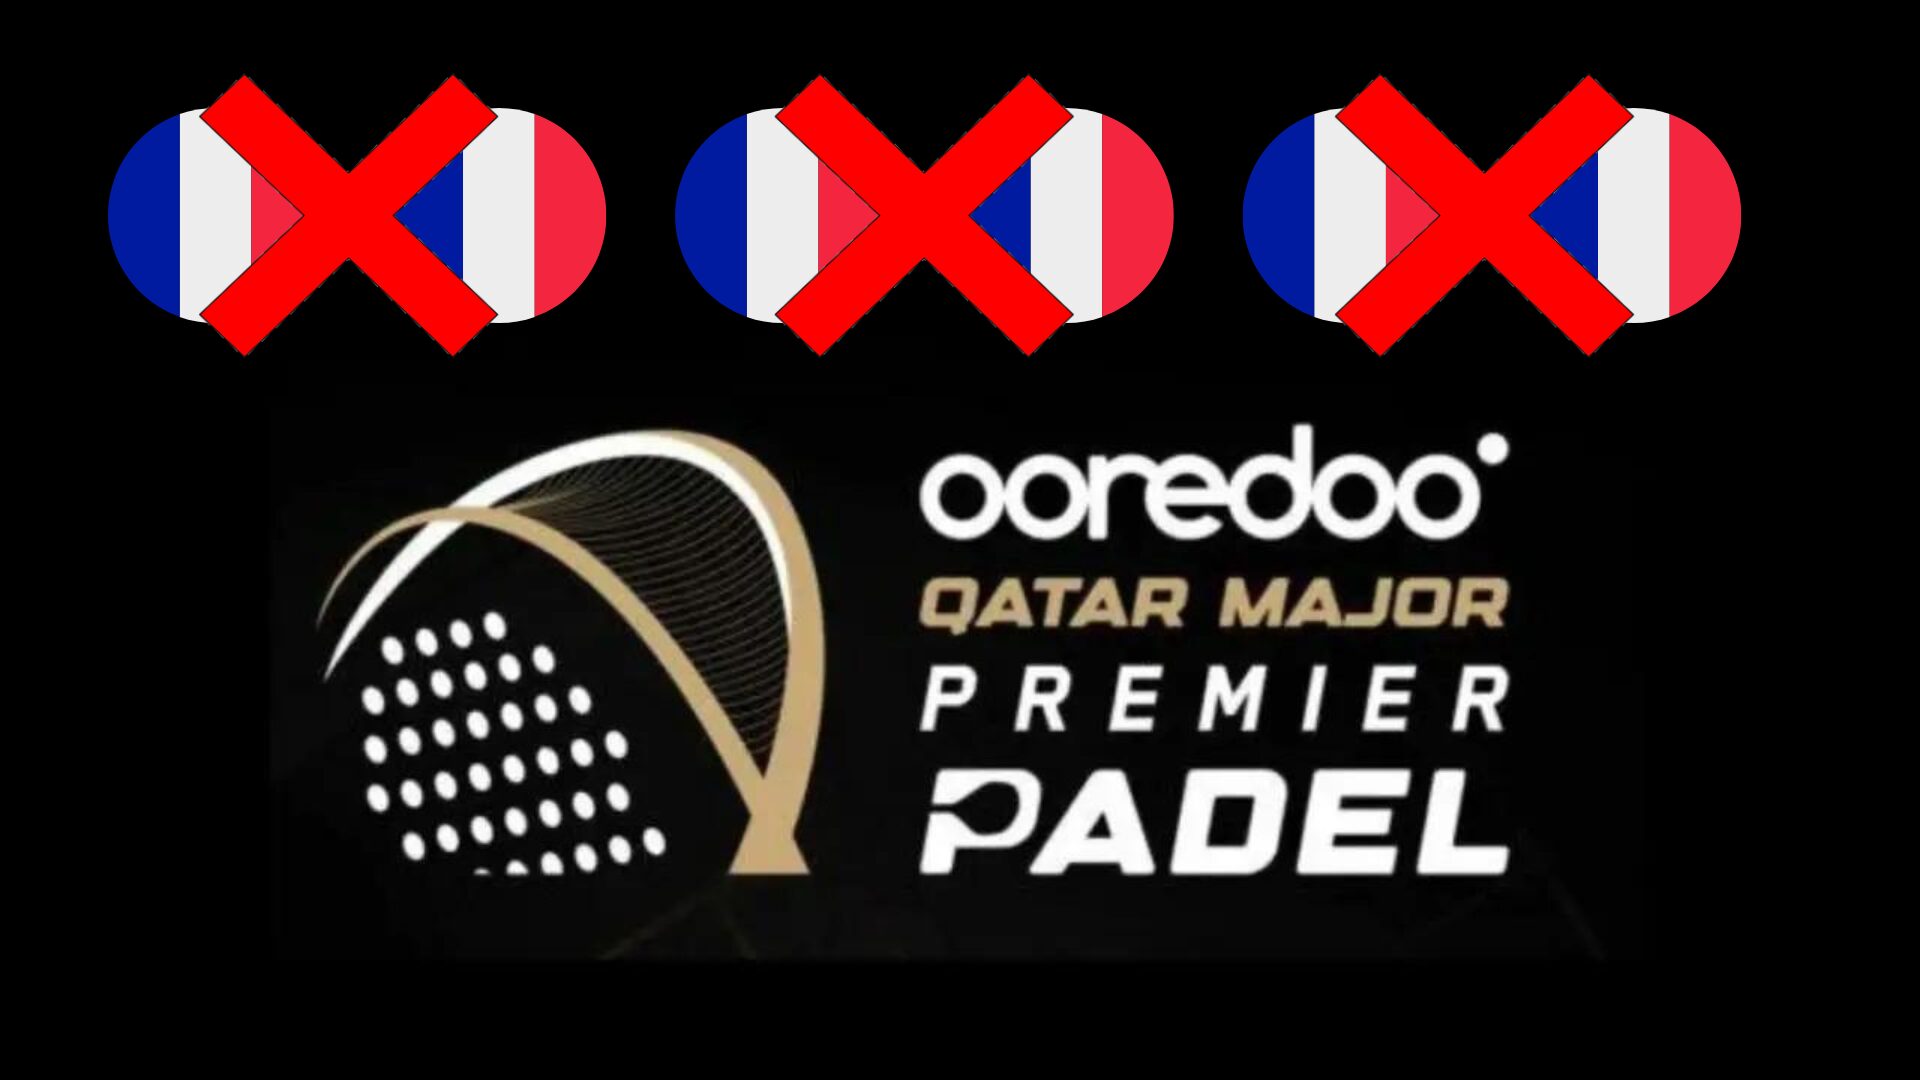 Premier Padel 卡塔尔Major三场法国队击败普雷维亚